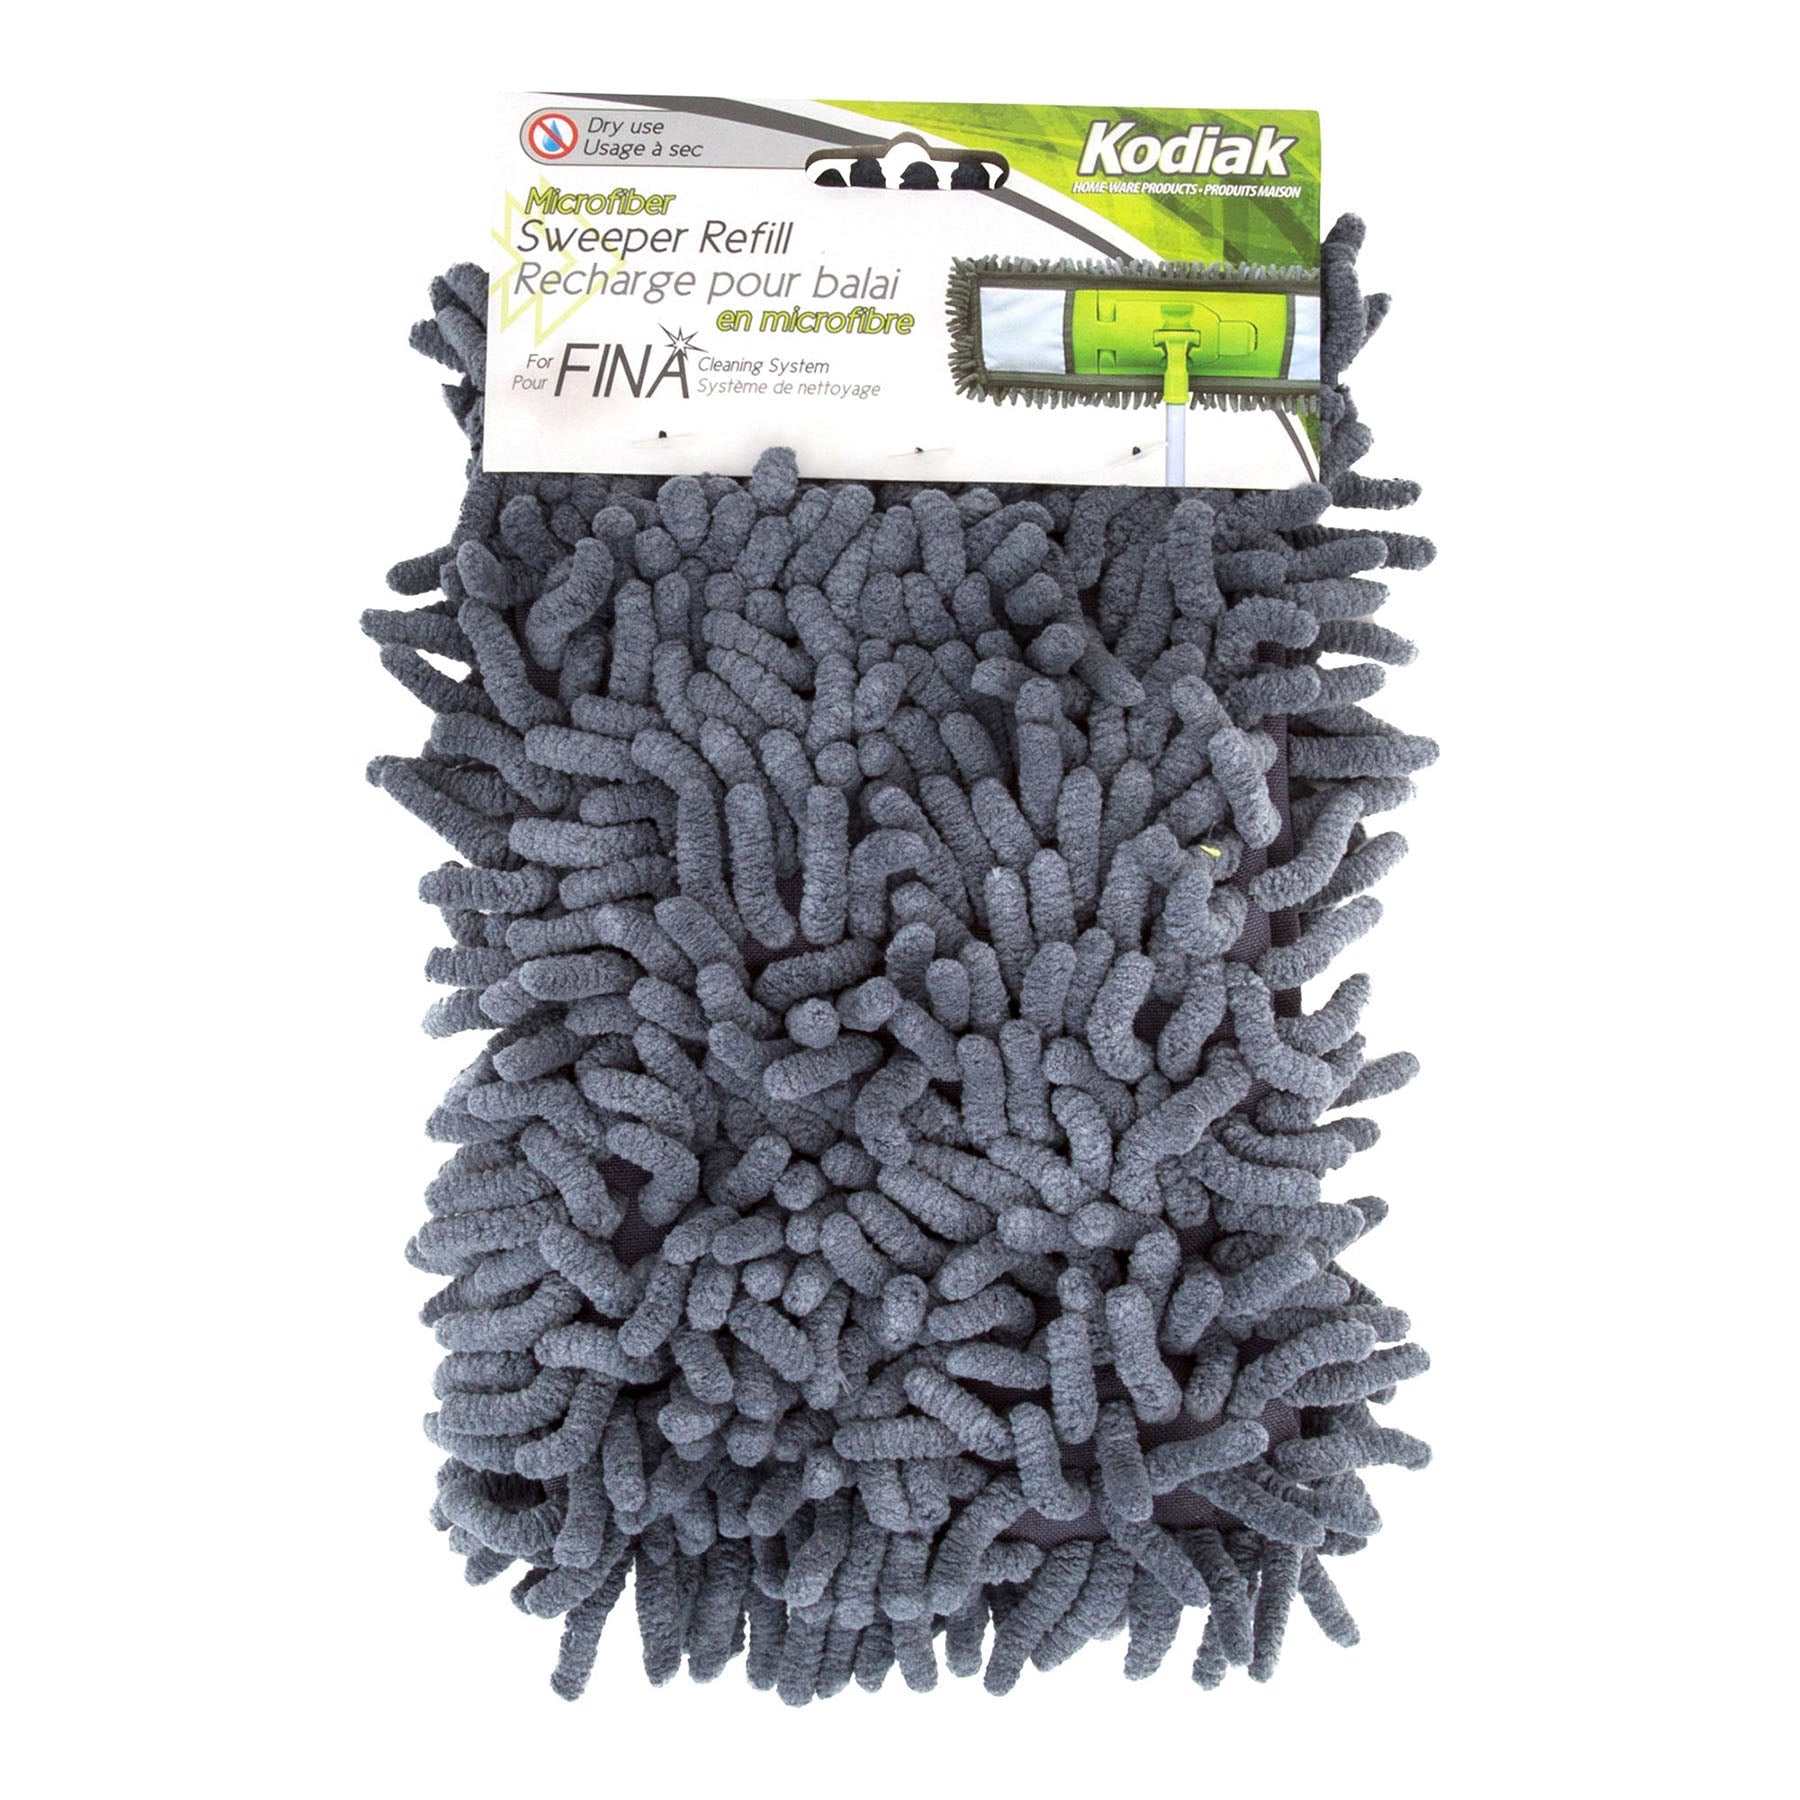 Kodiak Fina Sweeper Refill - Microfiber - Dry Use